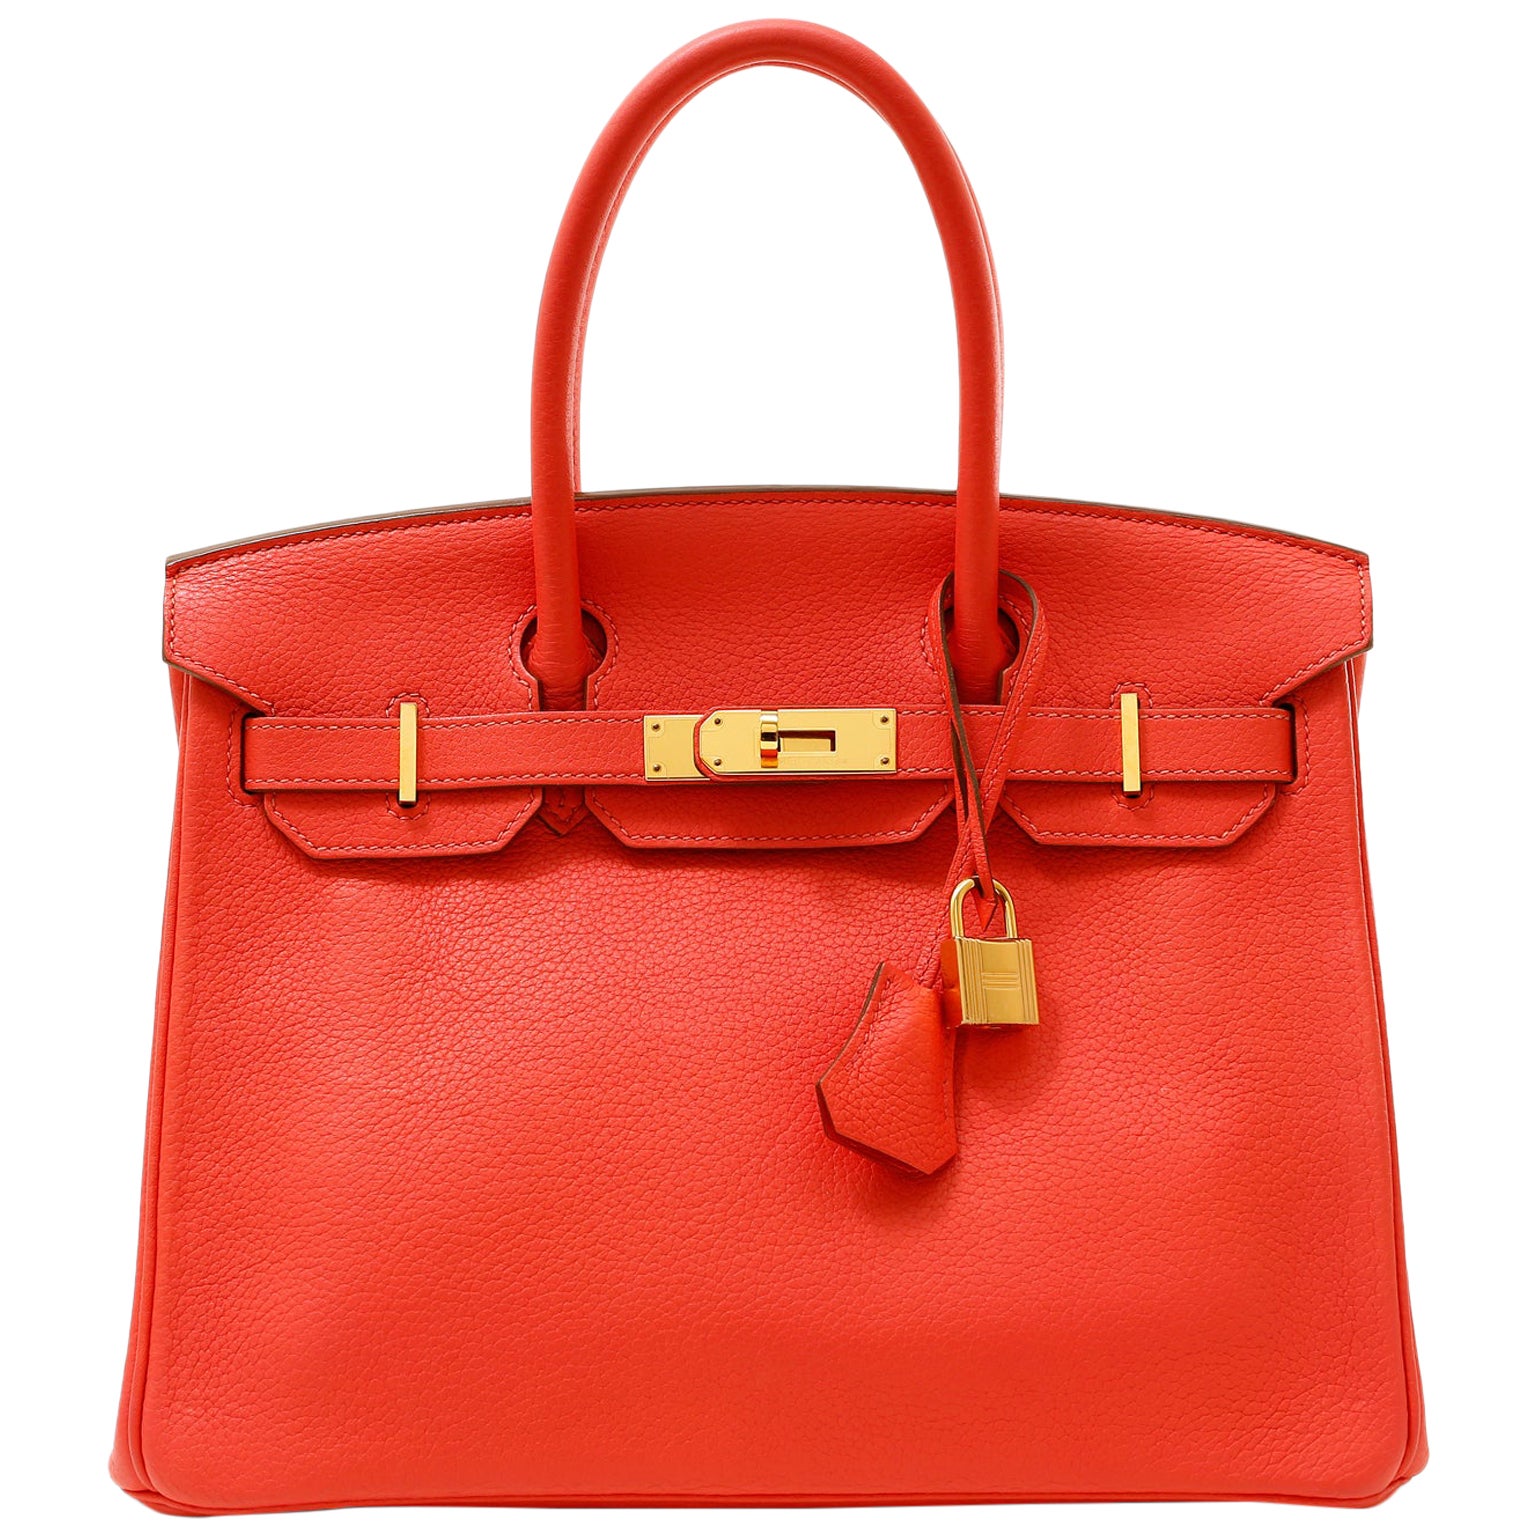 Hermès Poppy Red Togo 30 cm Birkin Bag with Gold Hardware